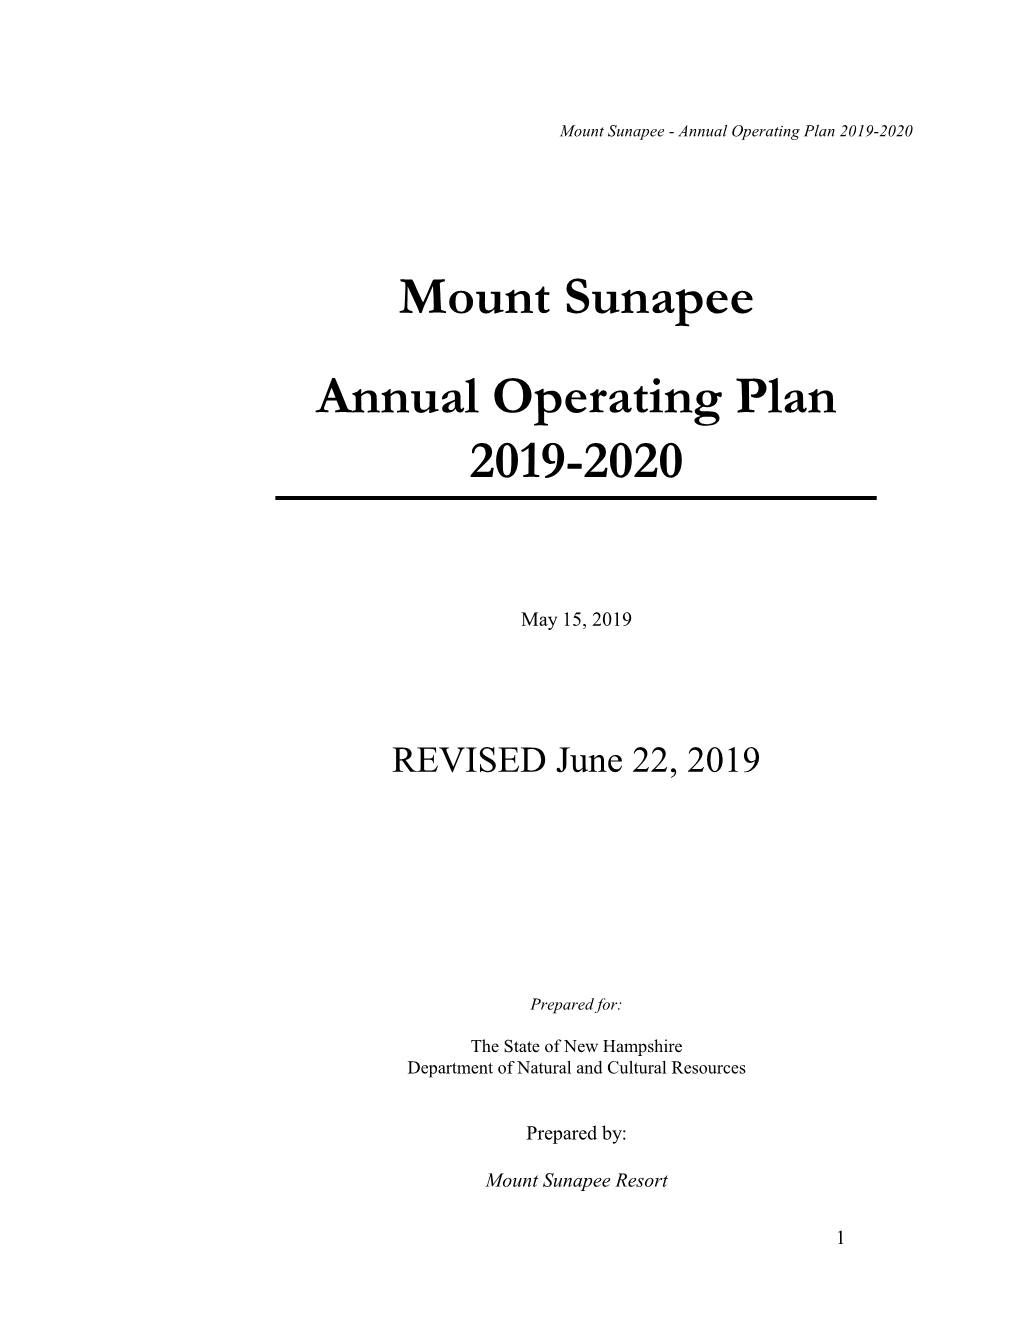 Mount Sunapee Resort Annual Operating Plan 2019-2020